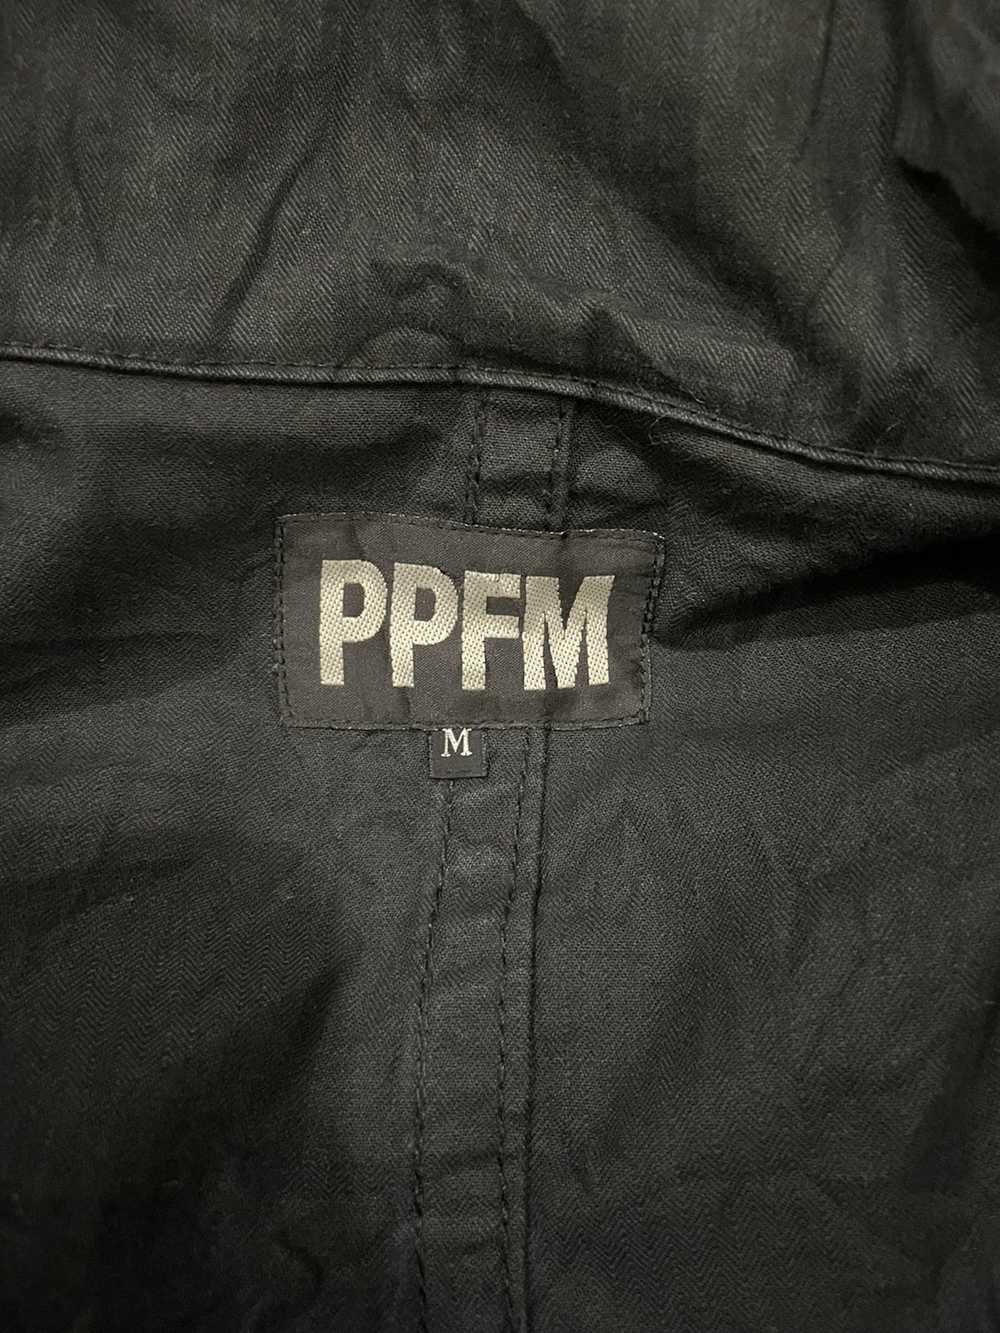 PPFM Rare🤘 PPFM Jacket Removable Sleeves - image 10